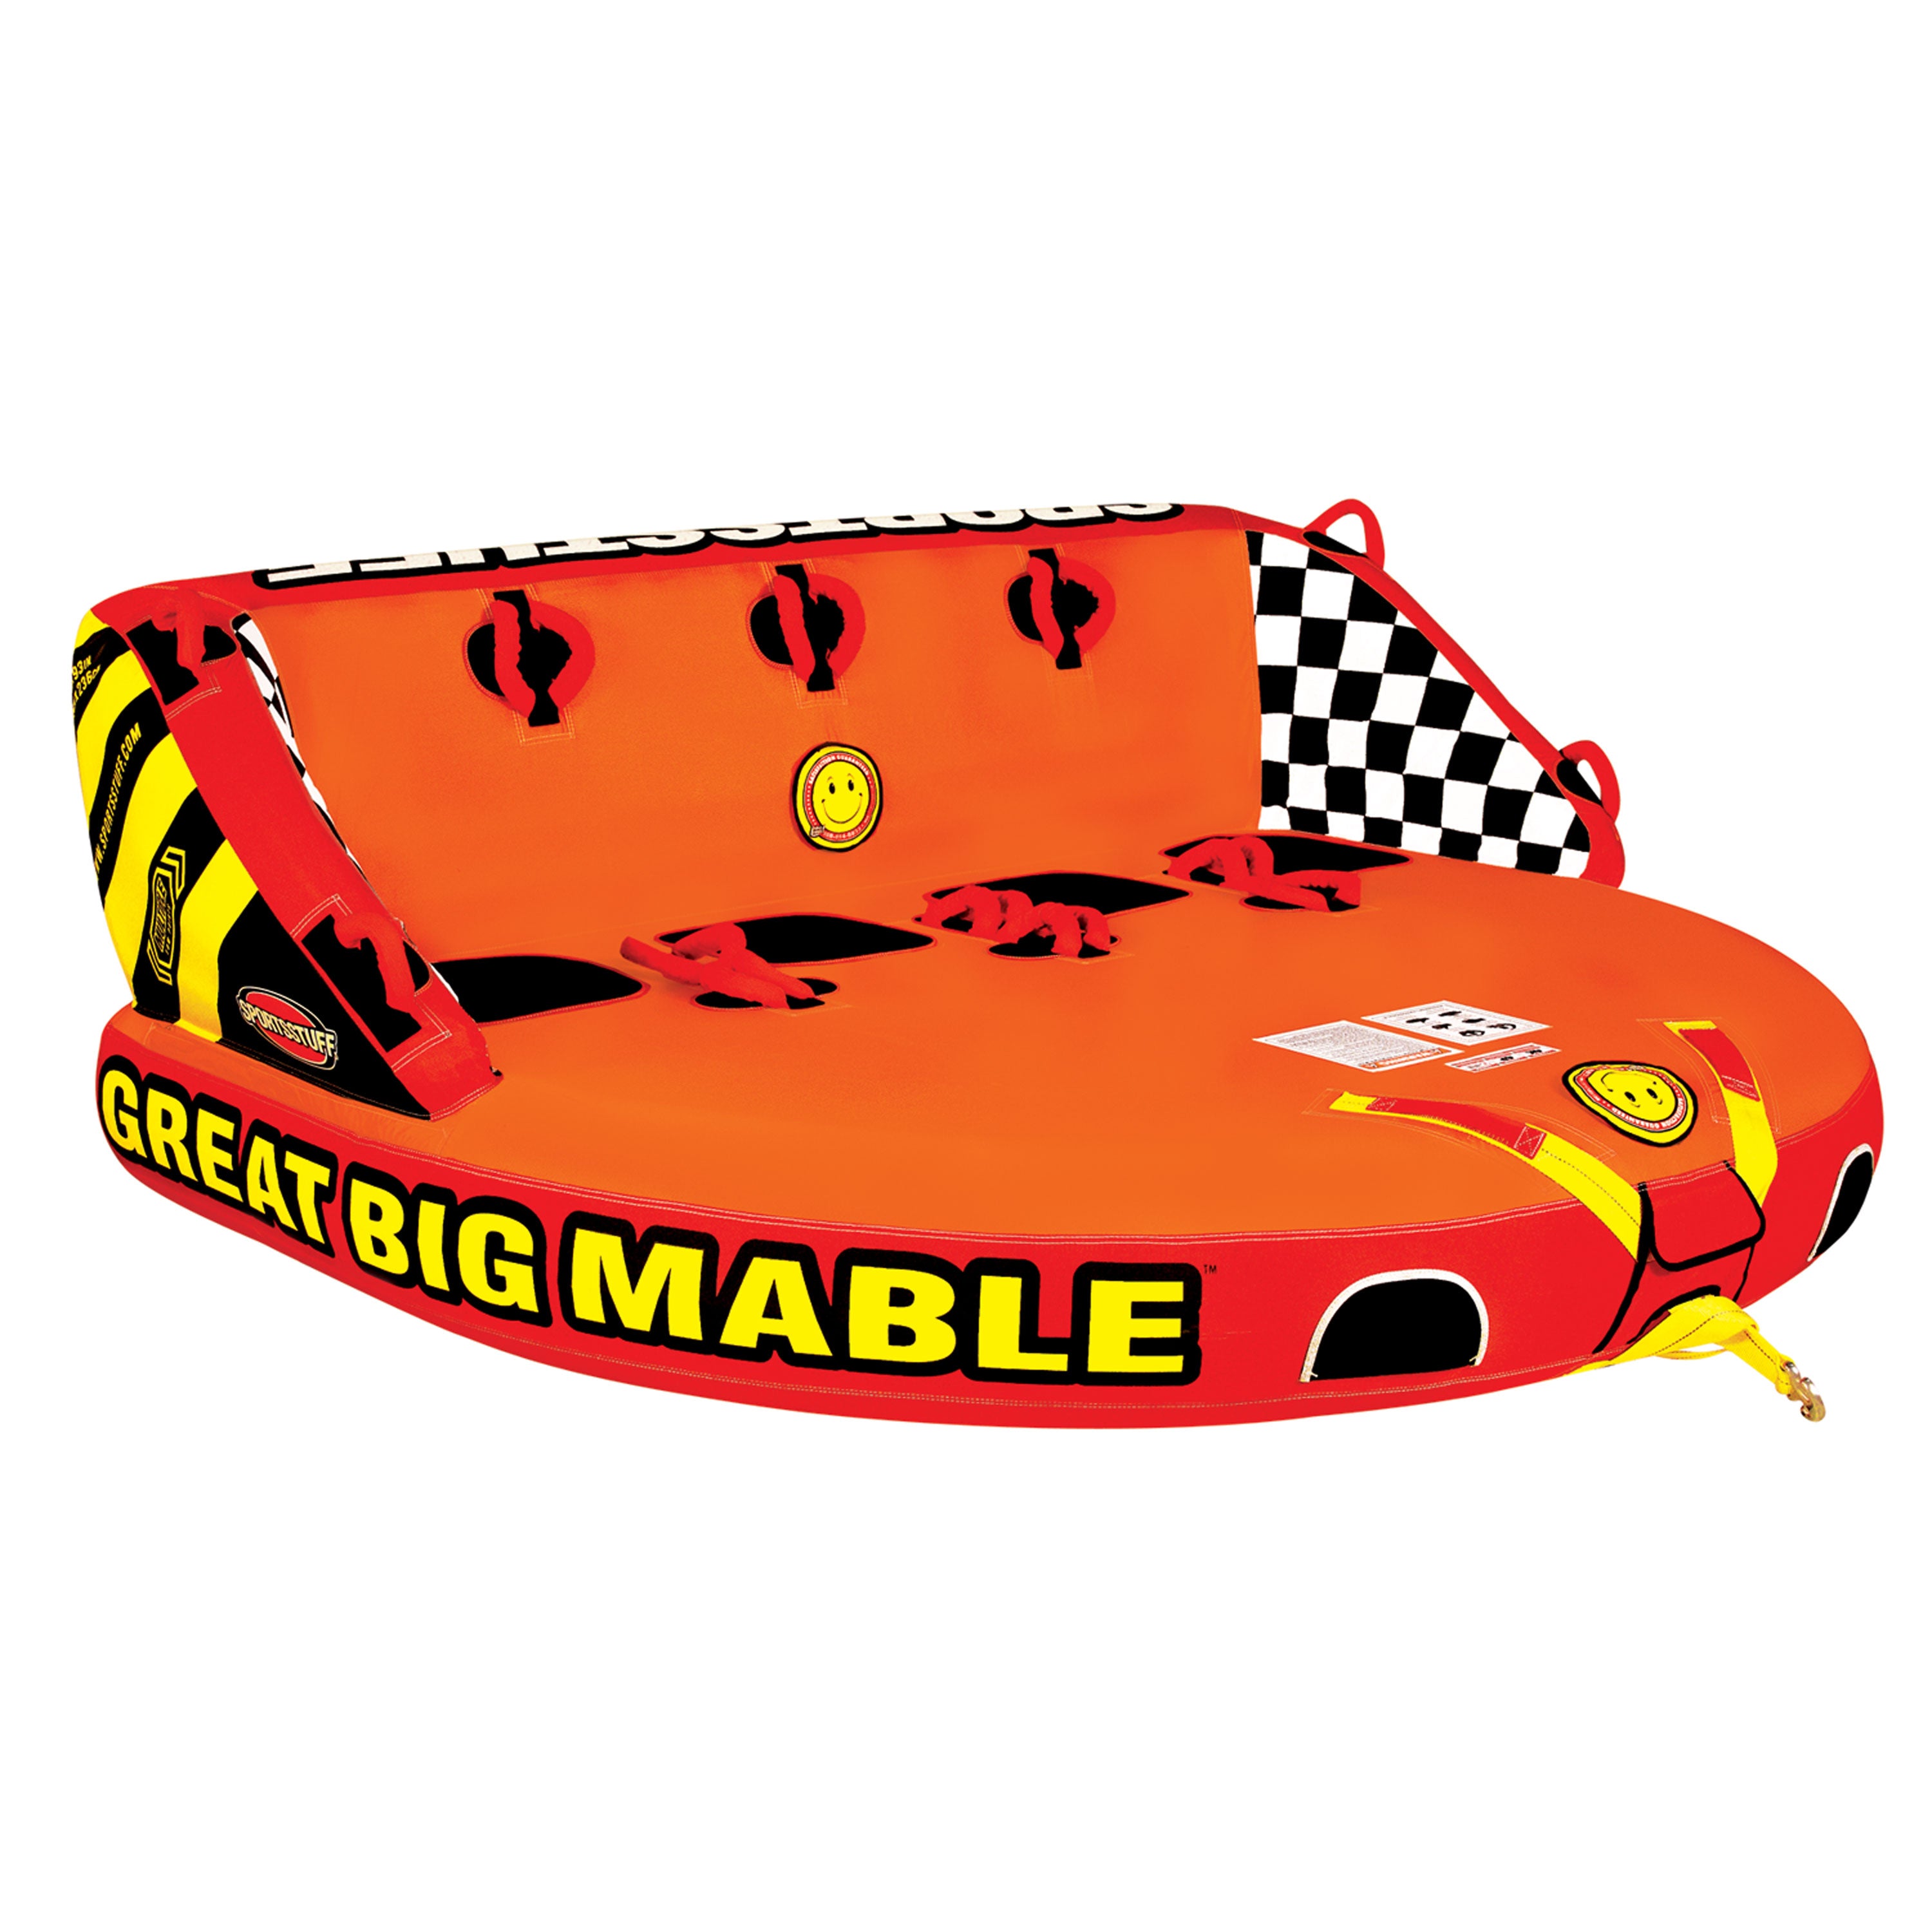 Sportsstuff 53-2218 Great Big Mable Inflatable Quadruple Rider Towable